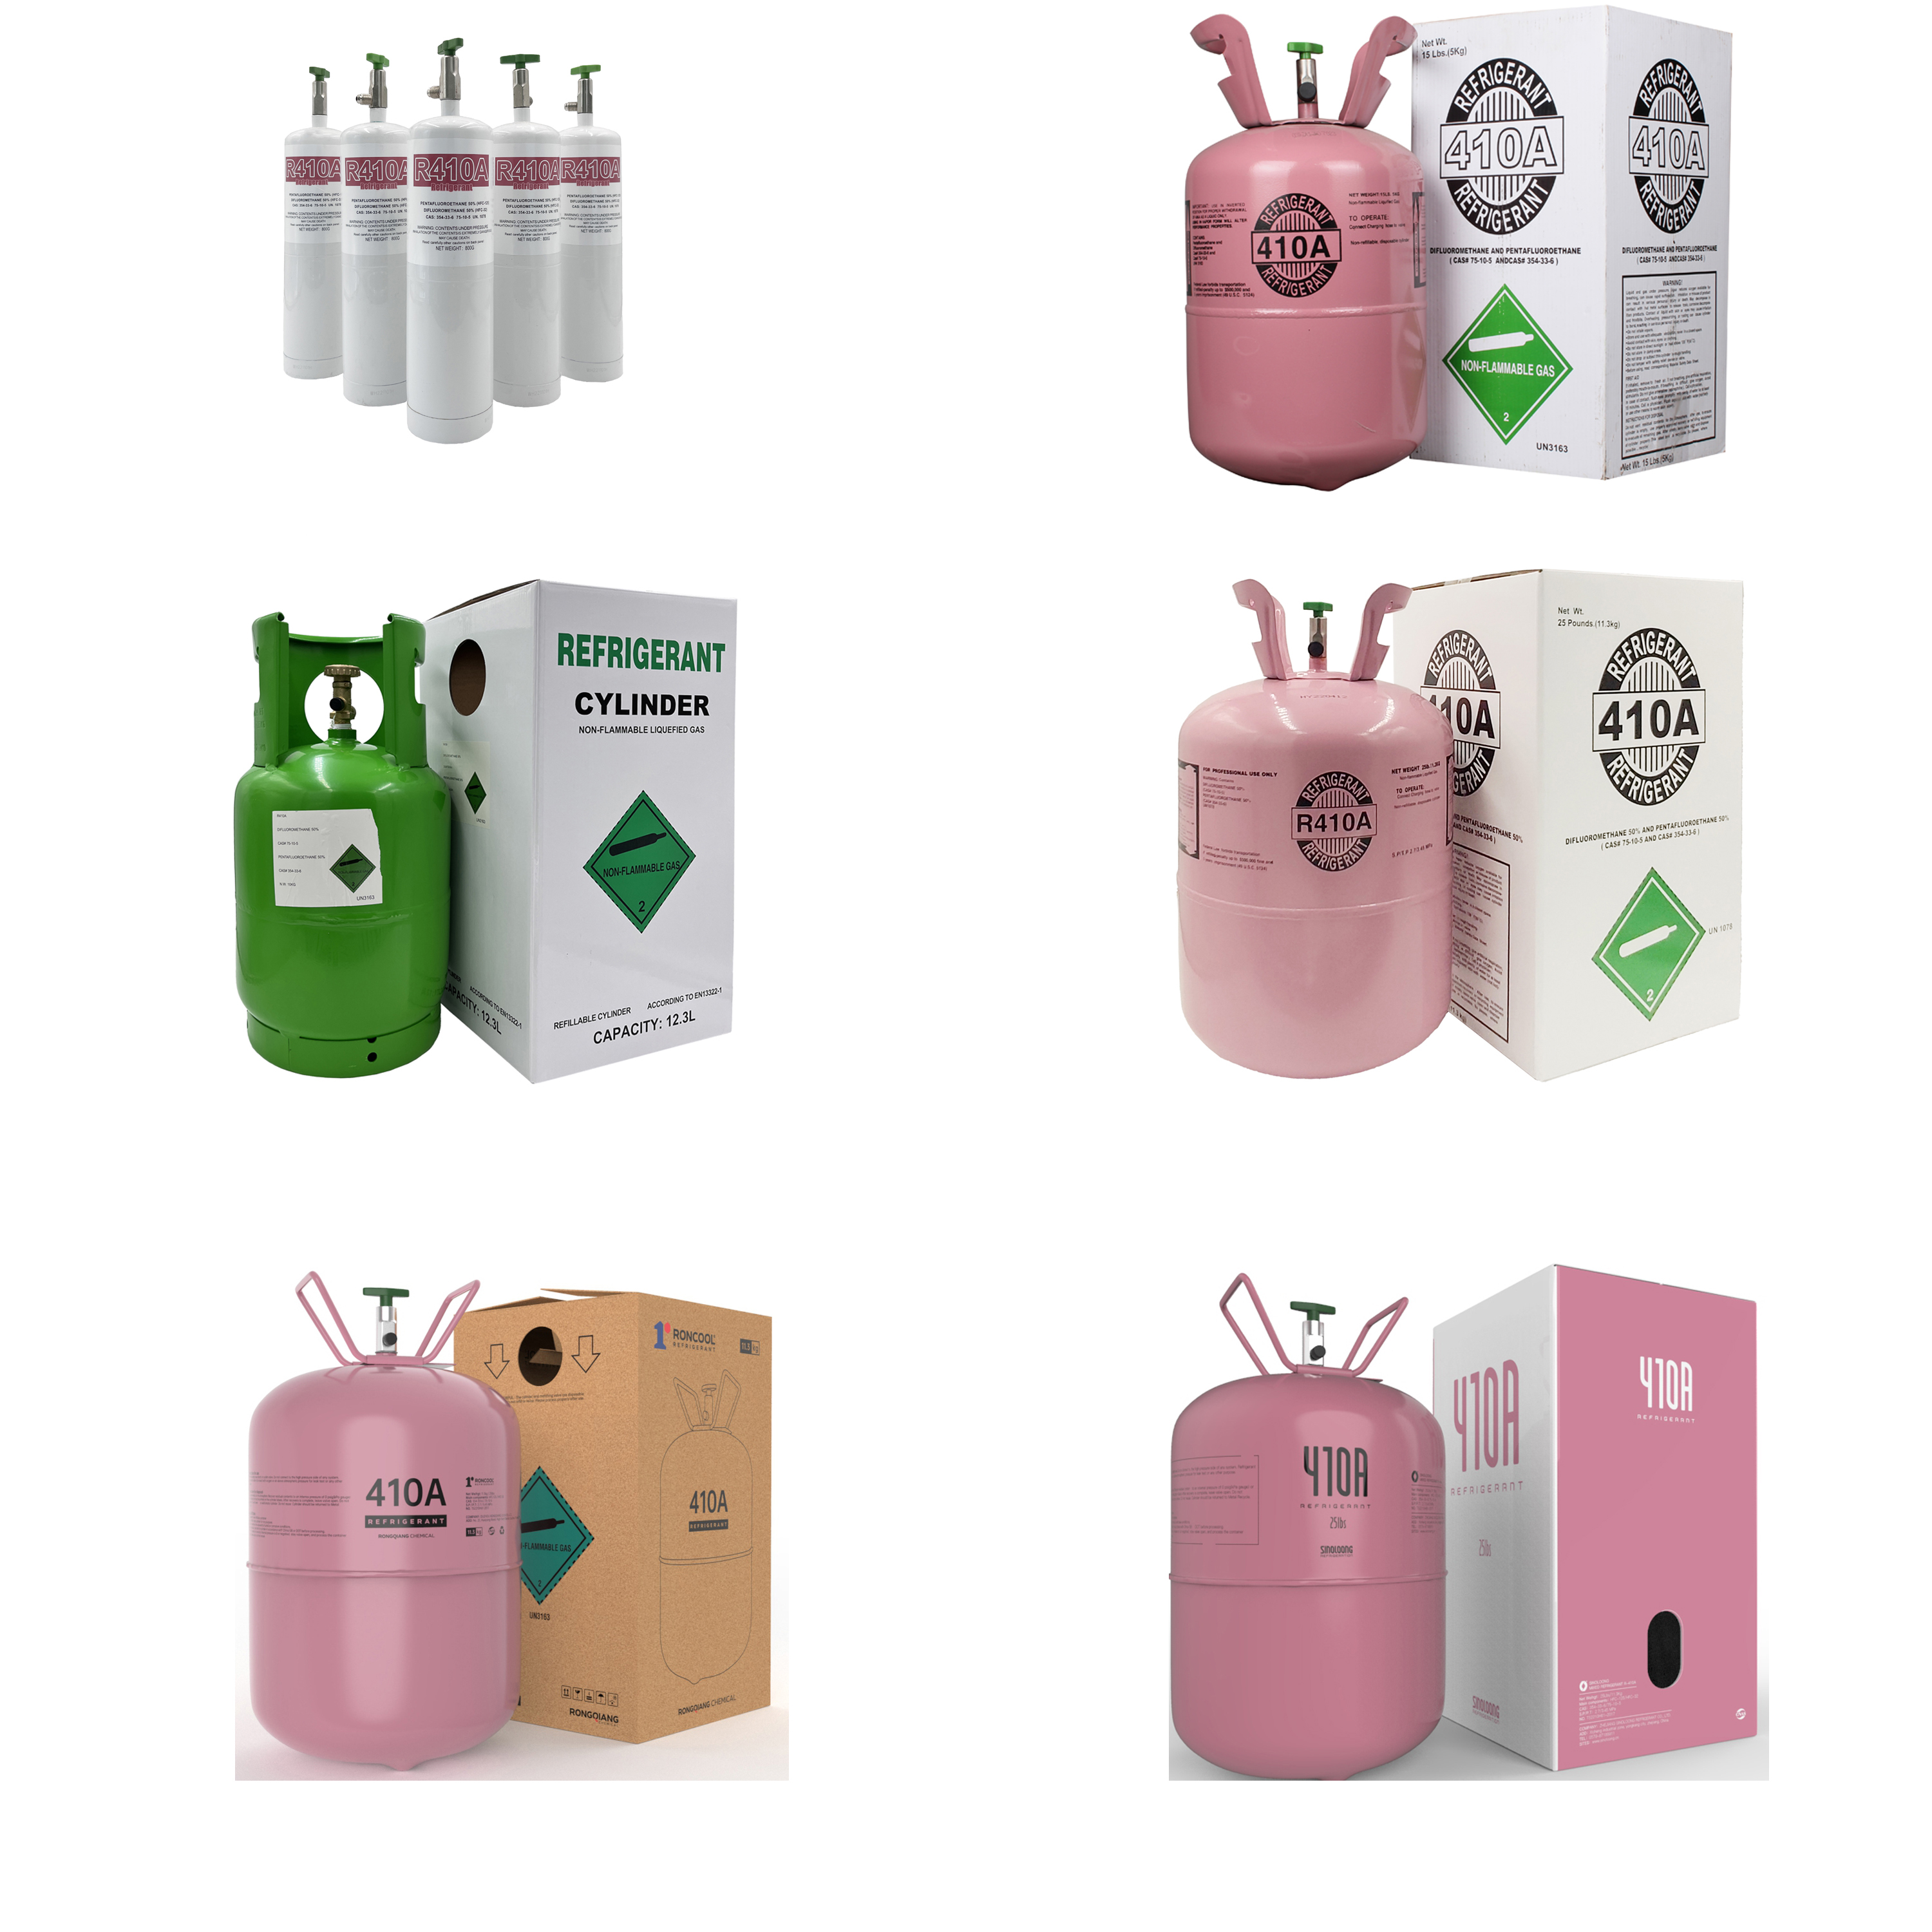 Refrigerant Gas Wholesale